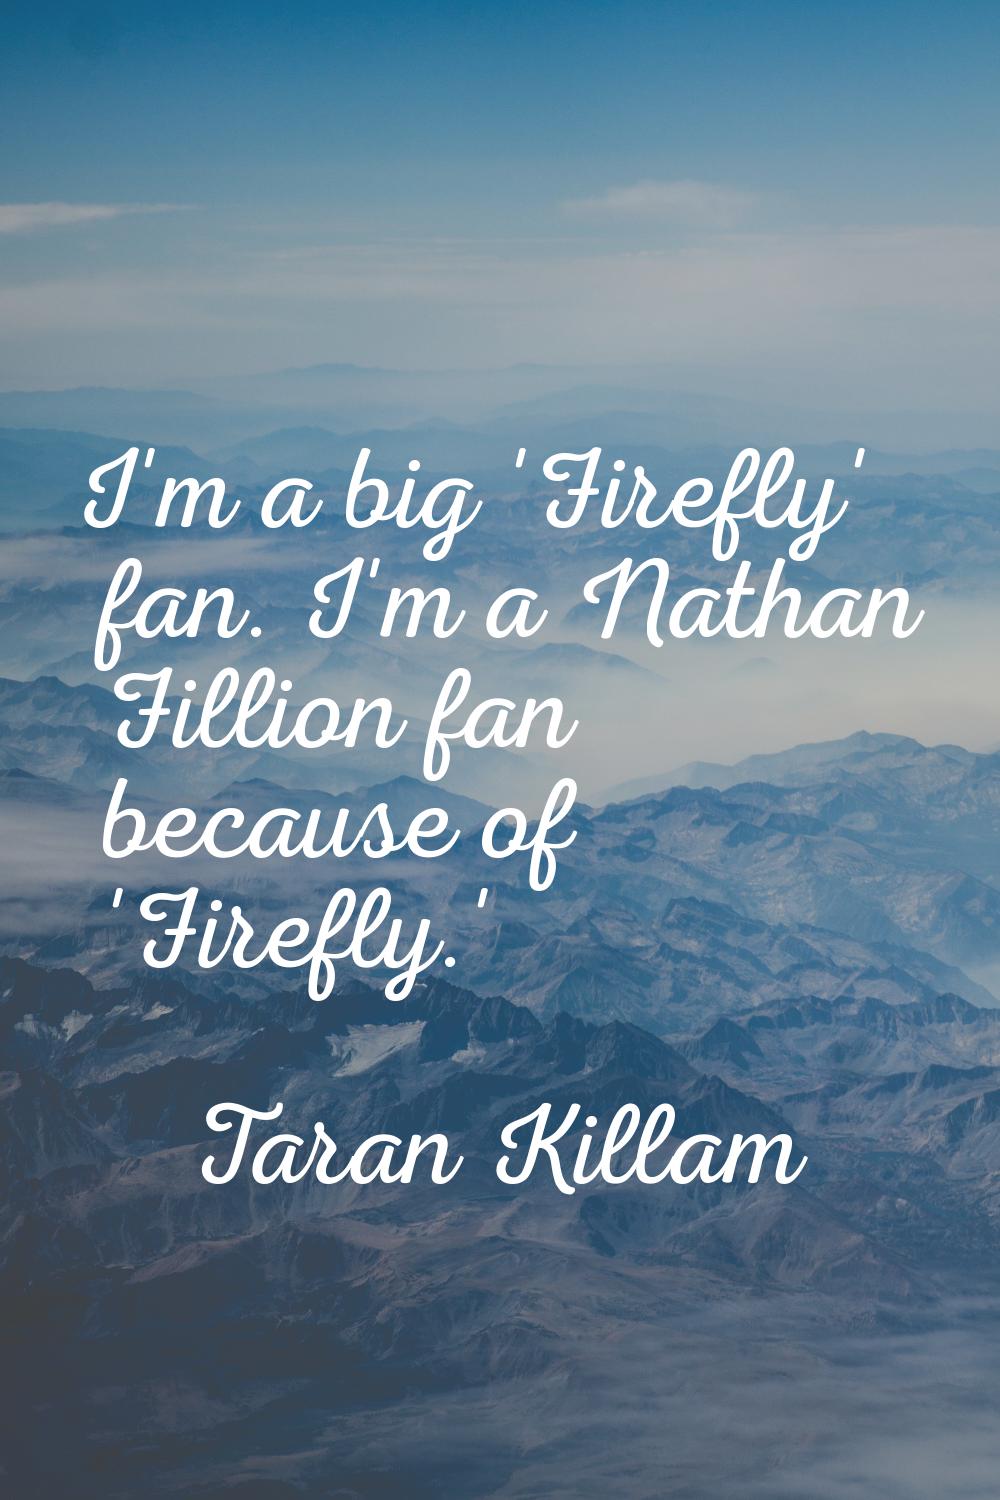 I'm a big 'Firefly' fan. I'm a Nathan Fillion fan because of 'Firefly.'